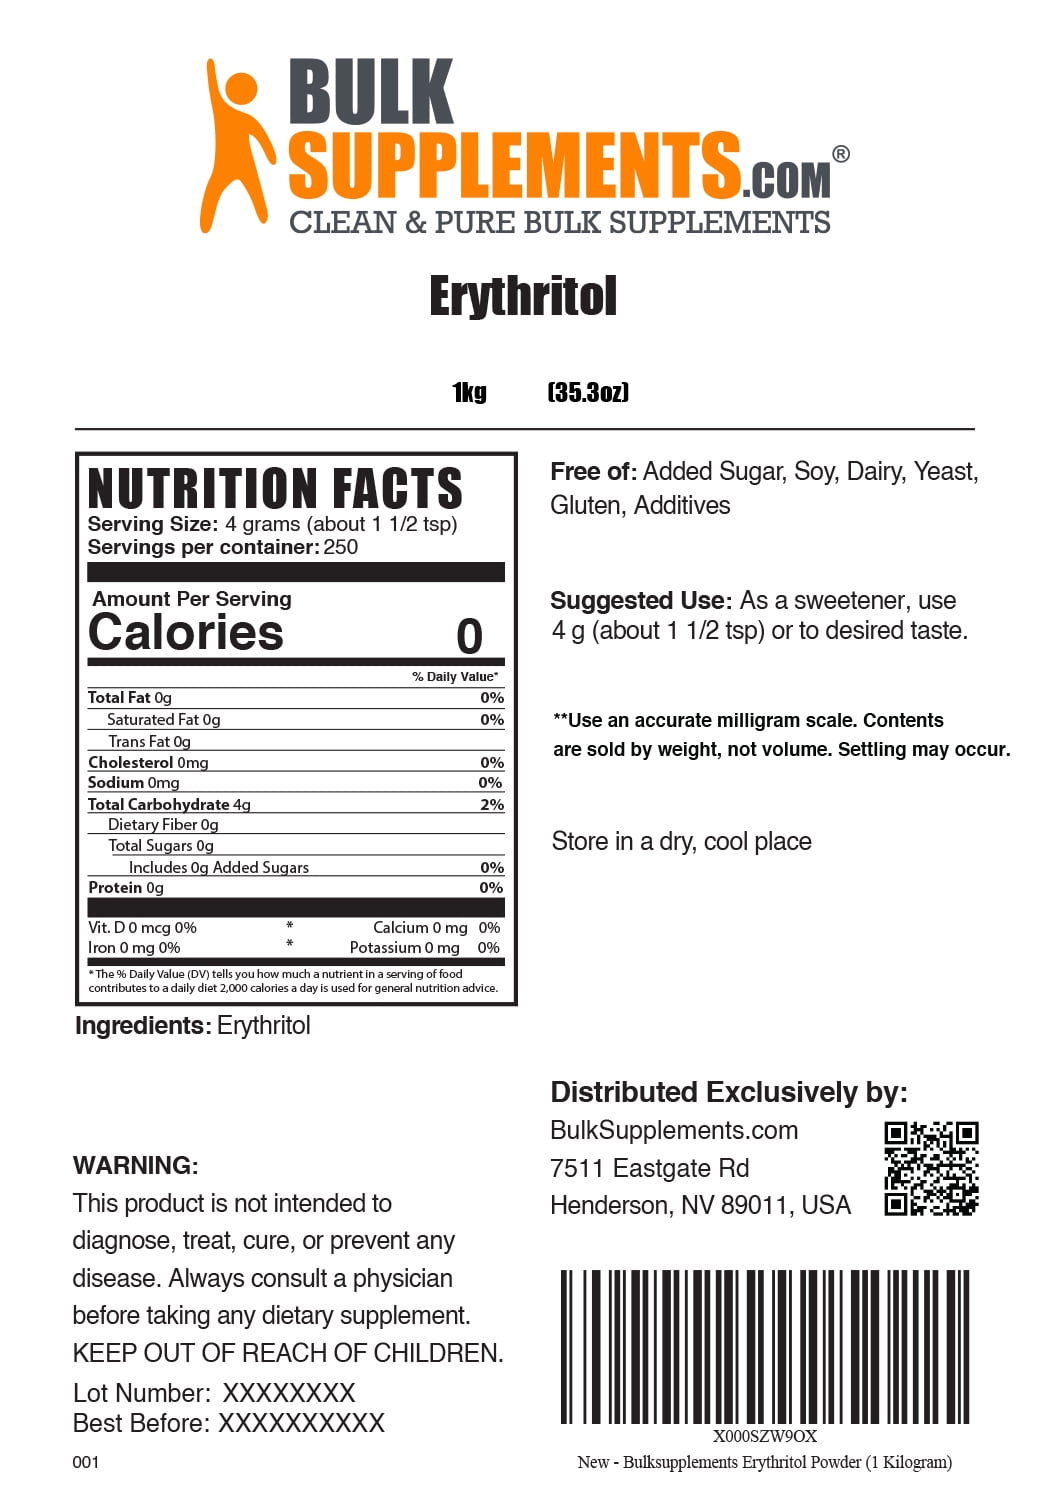 Erythritol Granules 1kg – Real Food Source